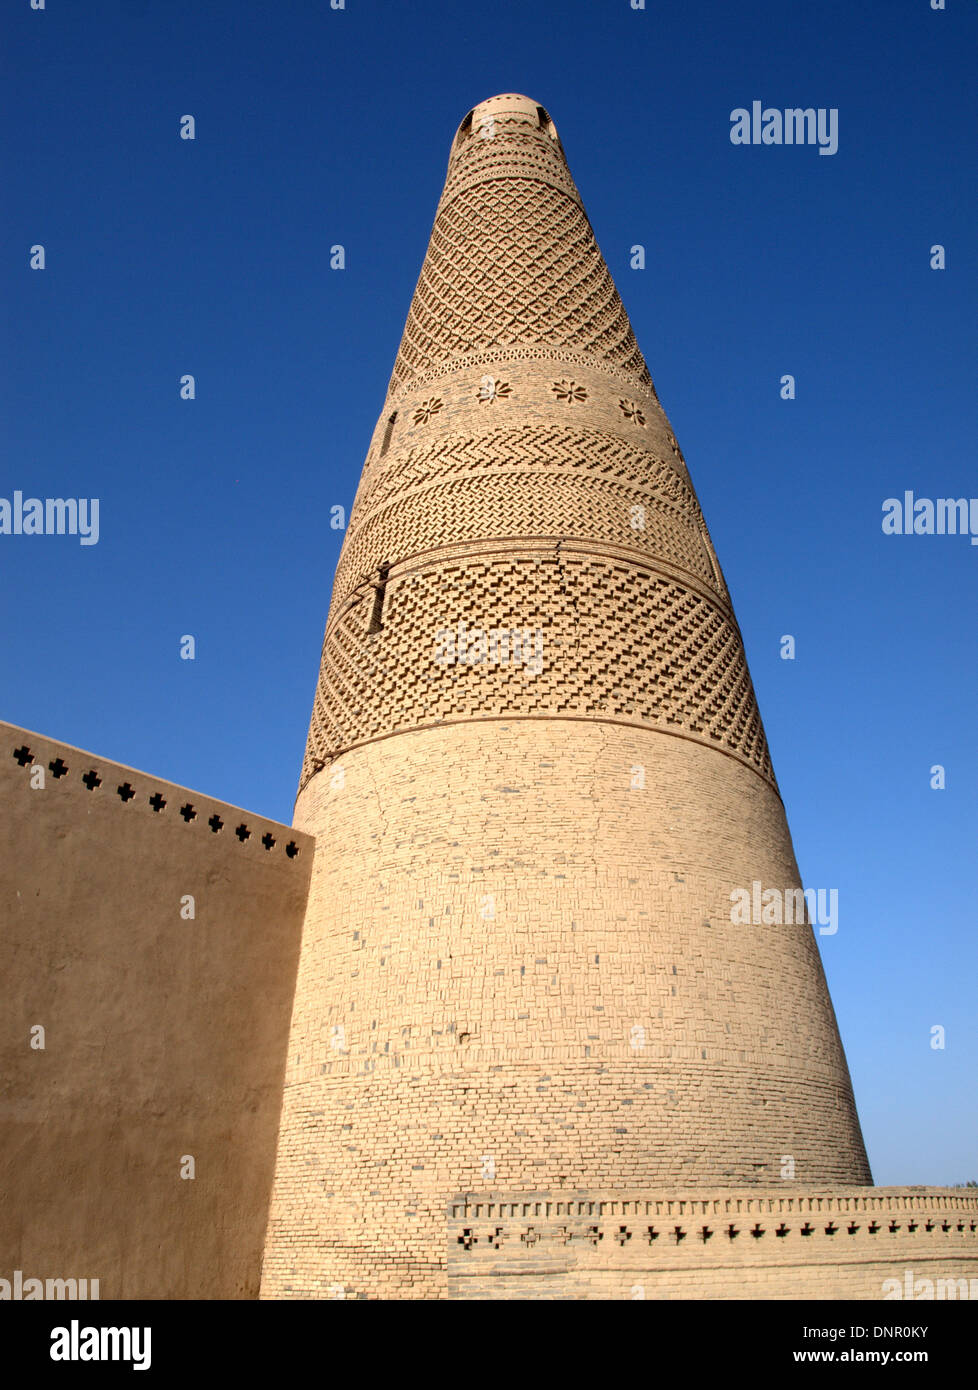 The Emin Minaret, or Imin Ta, near the Uyghur Mosque in Turpan (Turfan), Xinjiang, China. It is the tallest minaret in China, bu Stock Photo